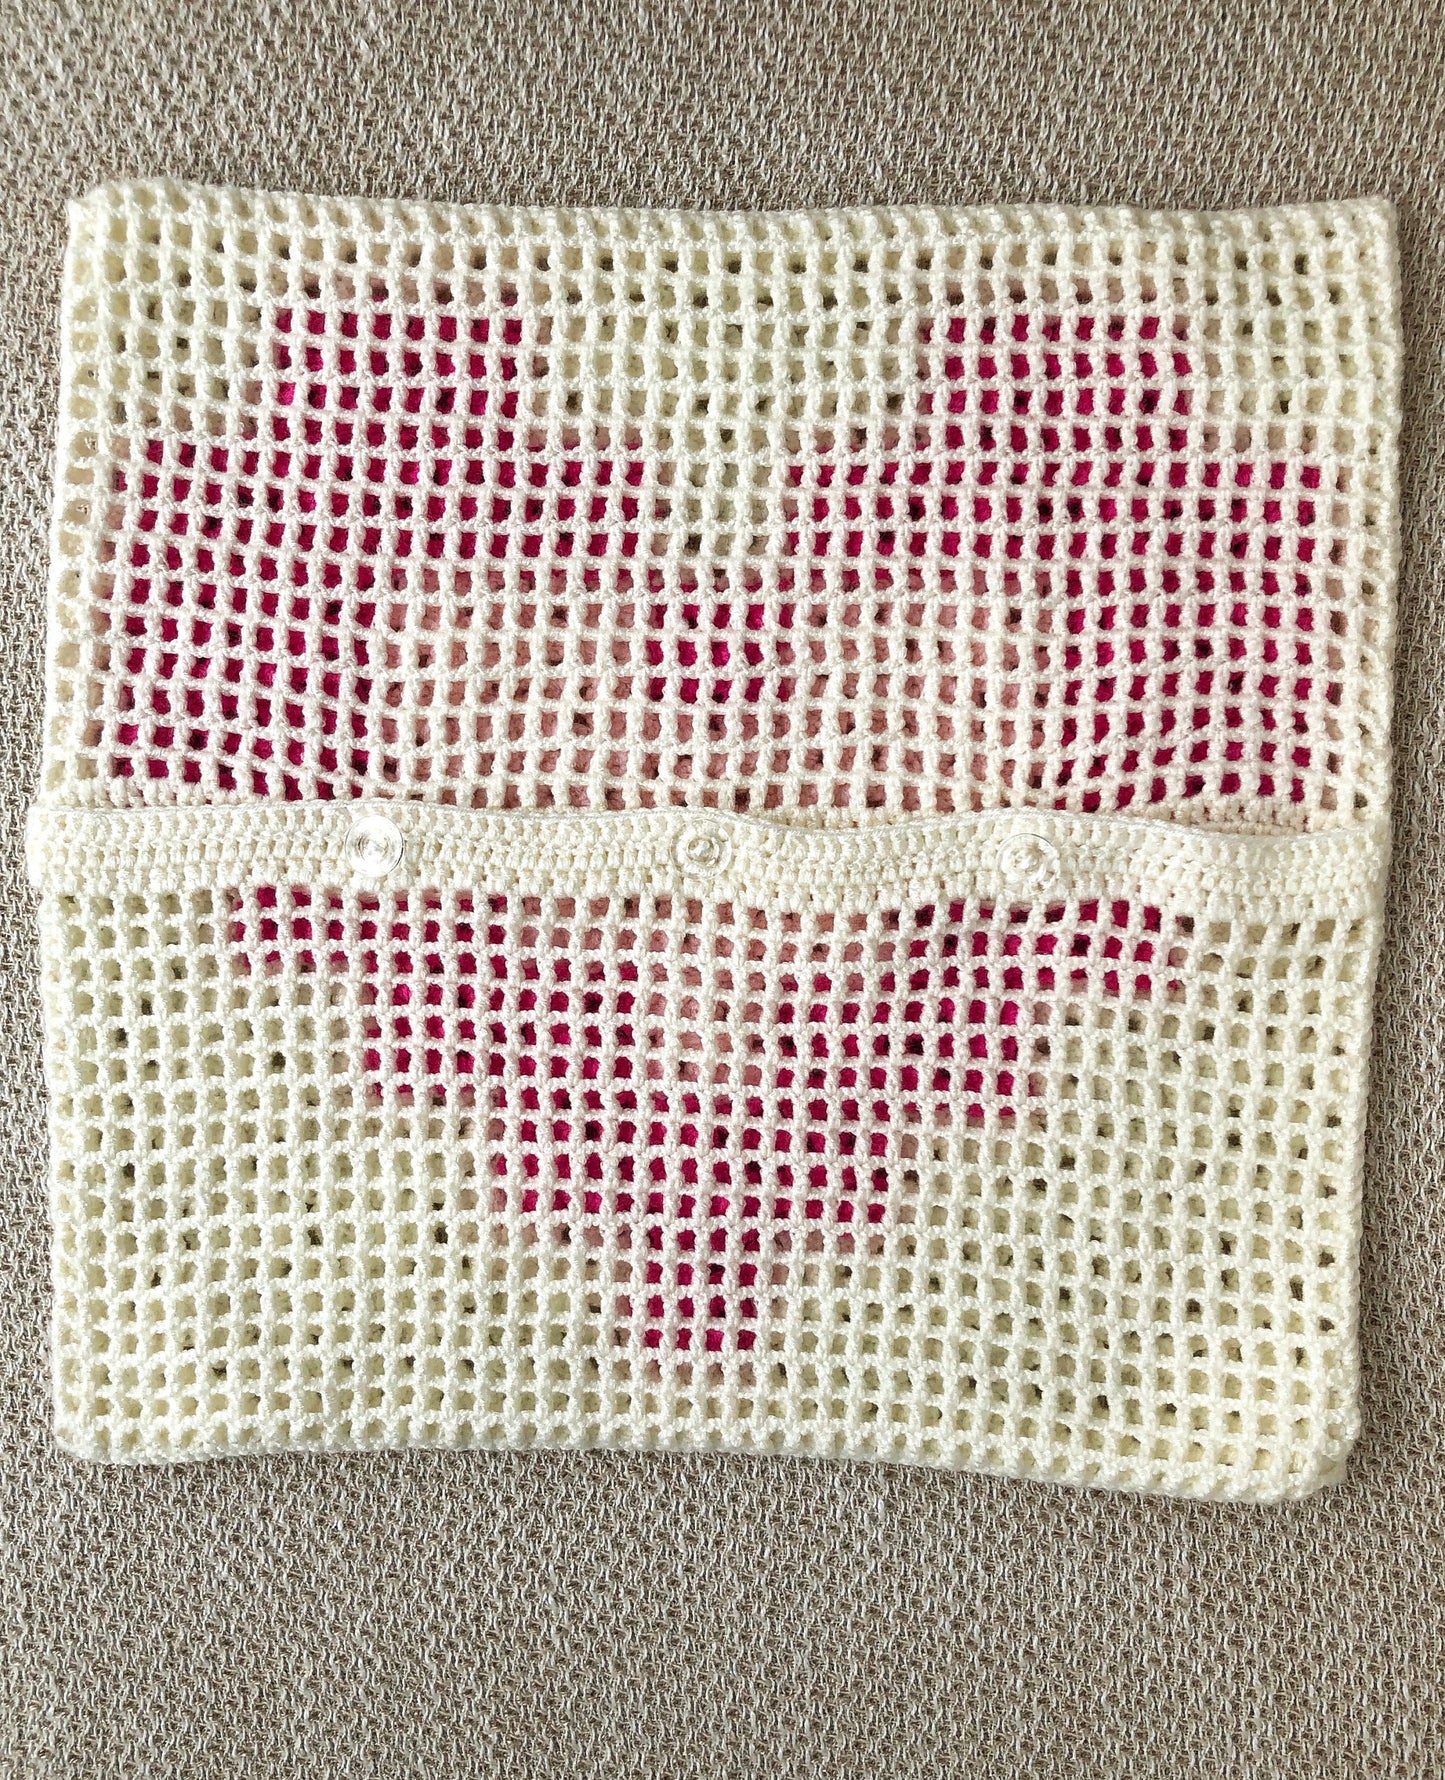 Patchwork Heart Granny Square Crochet Pillow Cover- Handmade Pillow Case